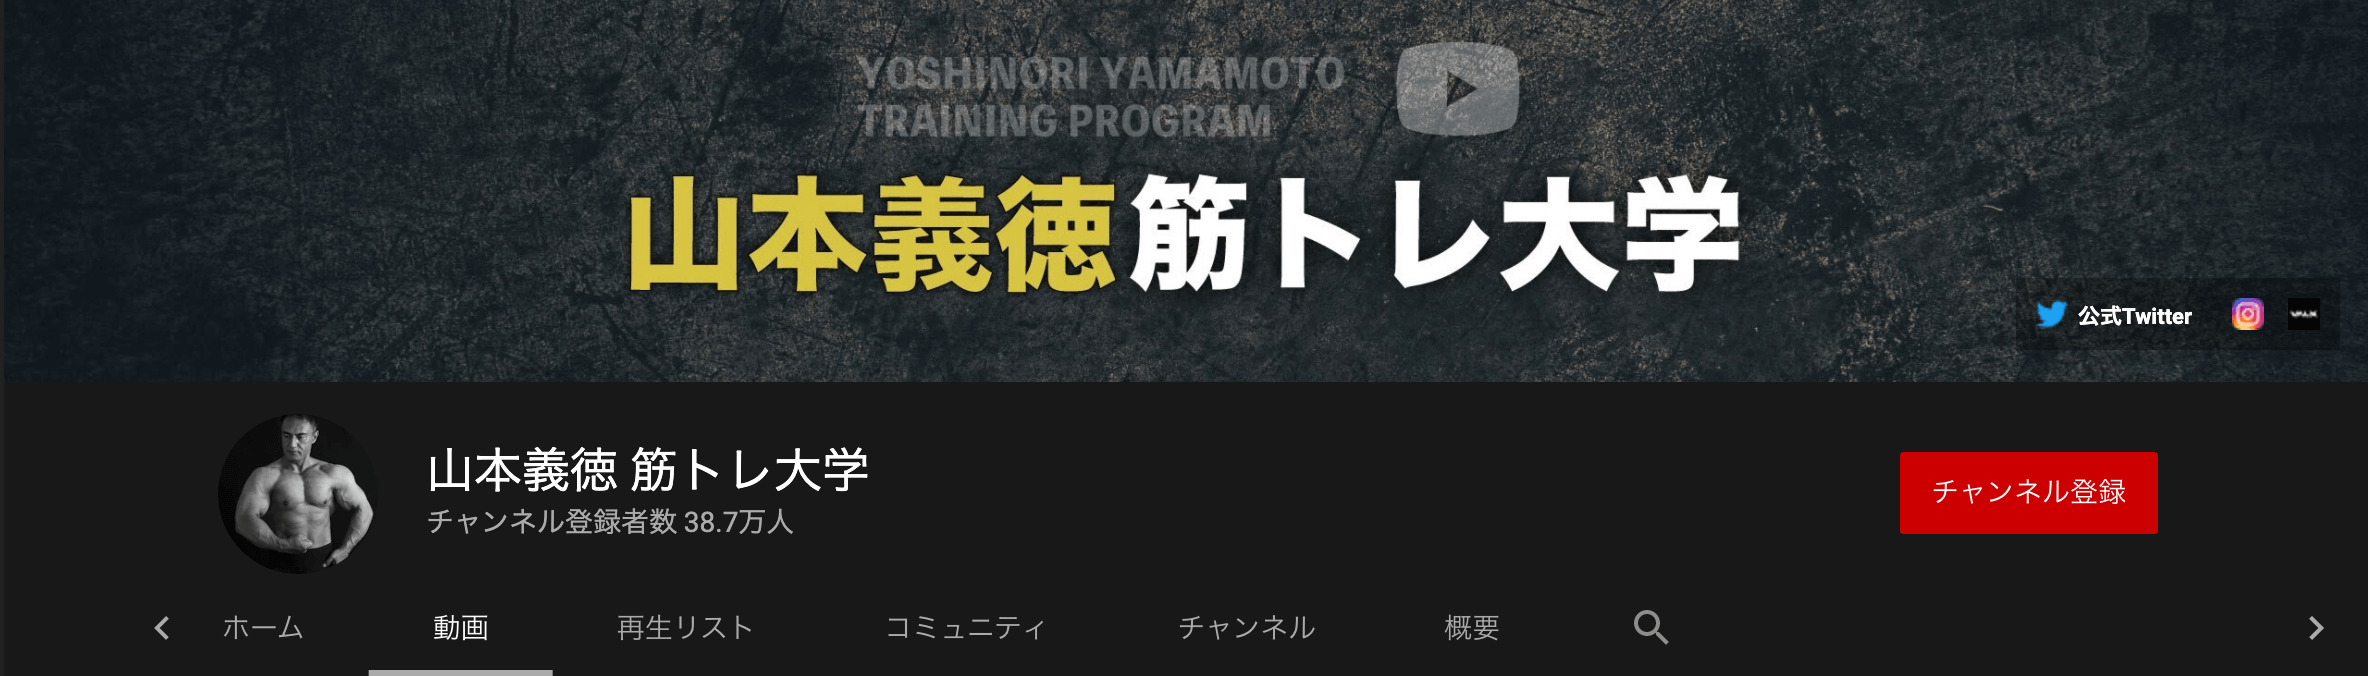 youtube_kintore_yosinoriyamamoto